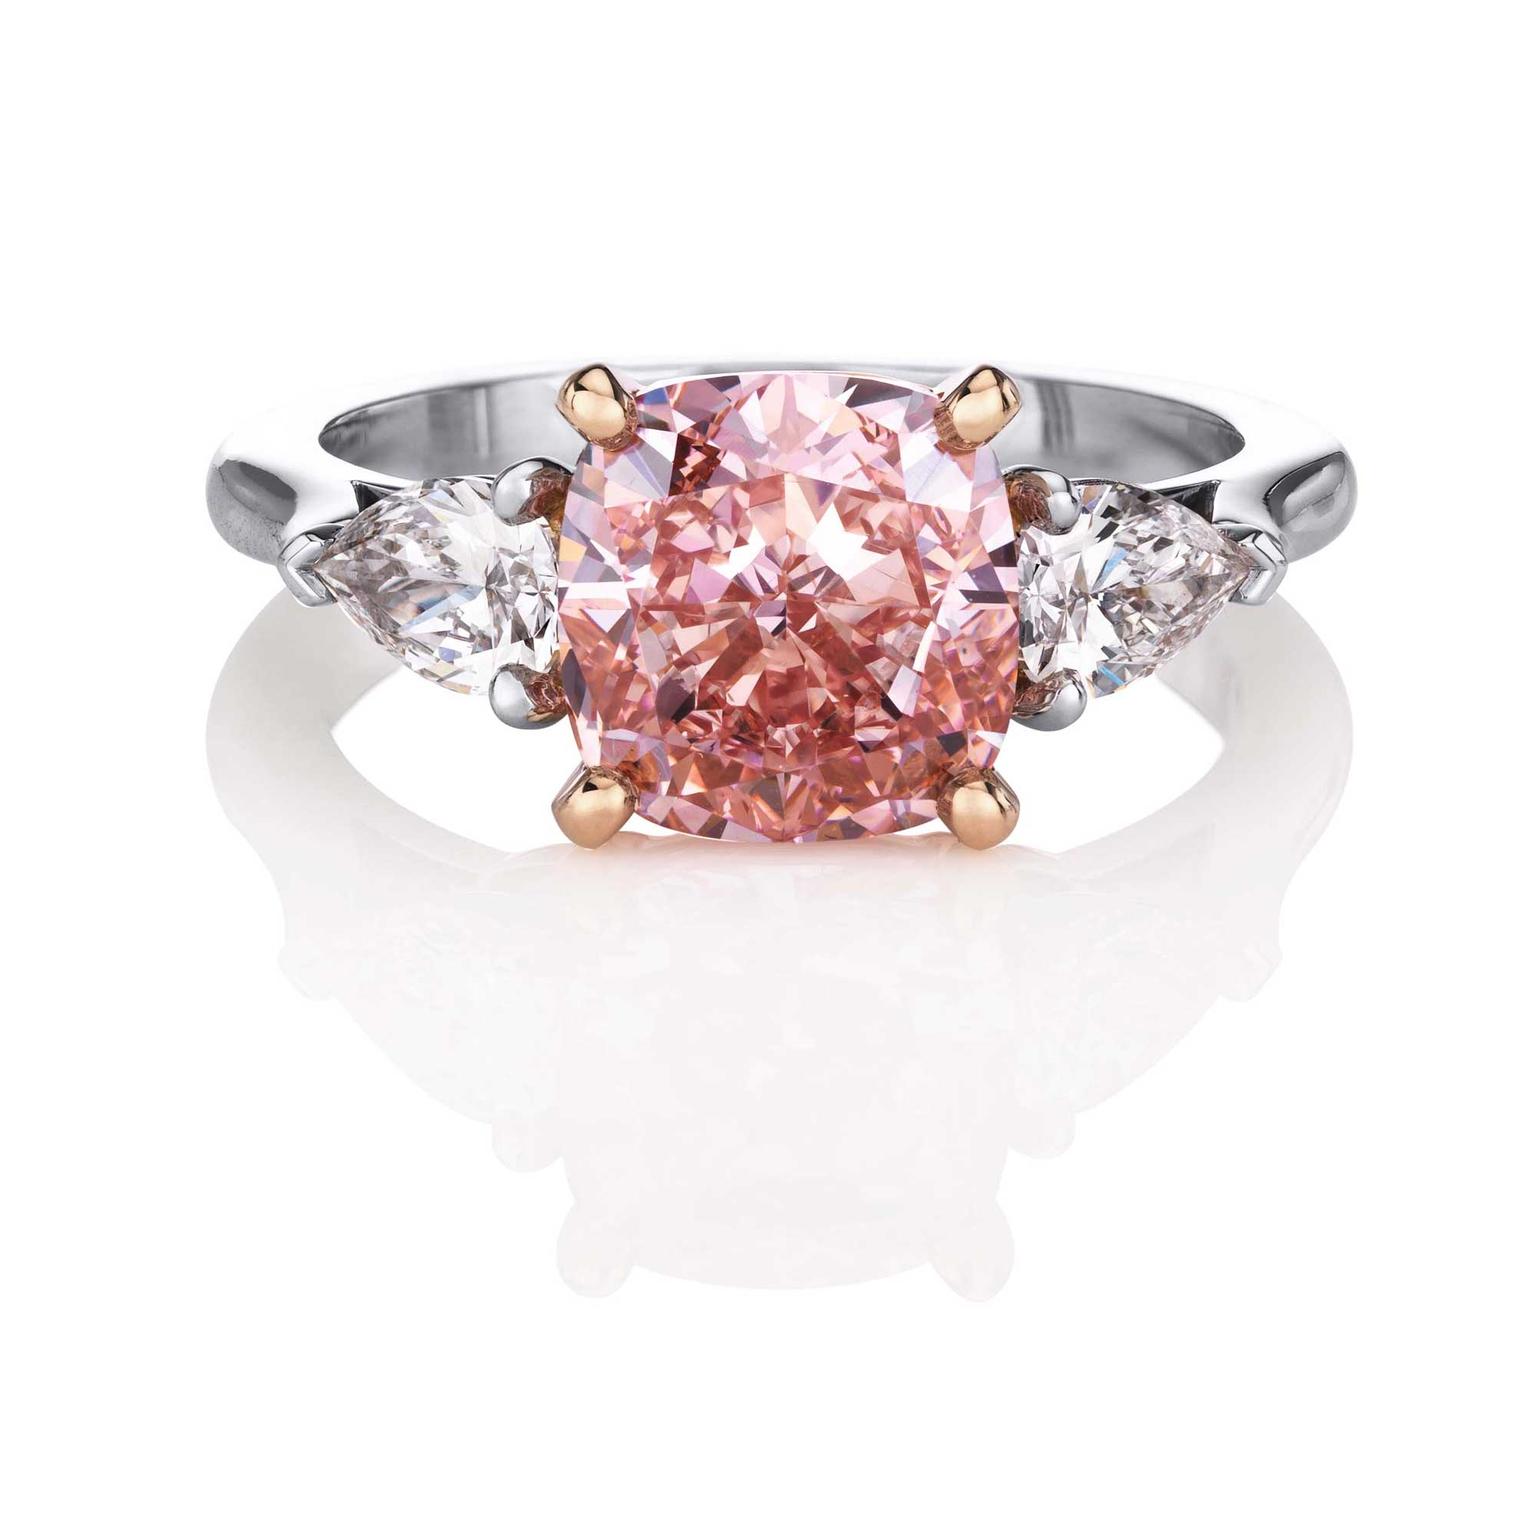 De Beers cushion-cut Fancy Intense pink diamond ring